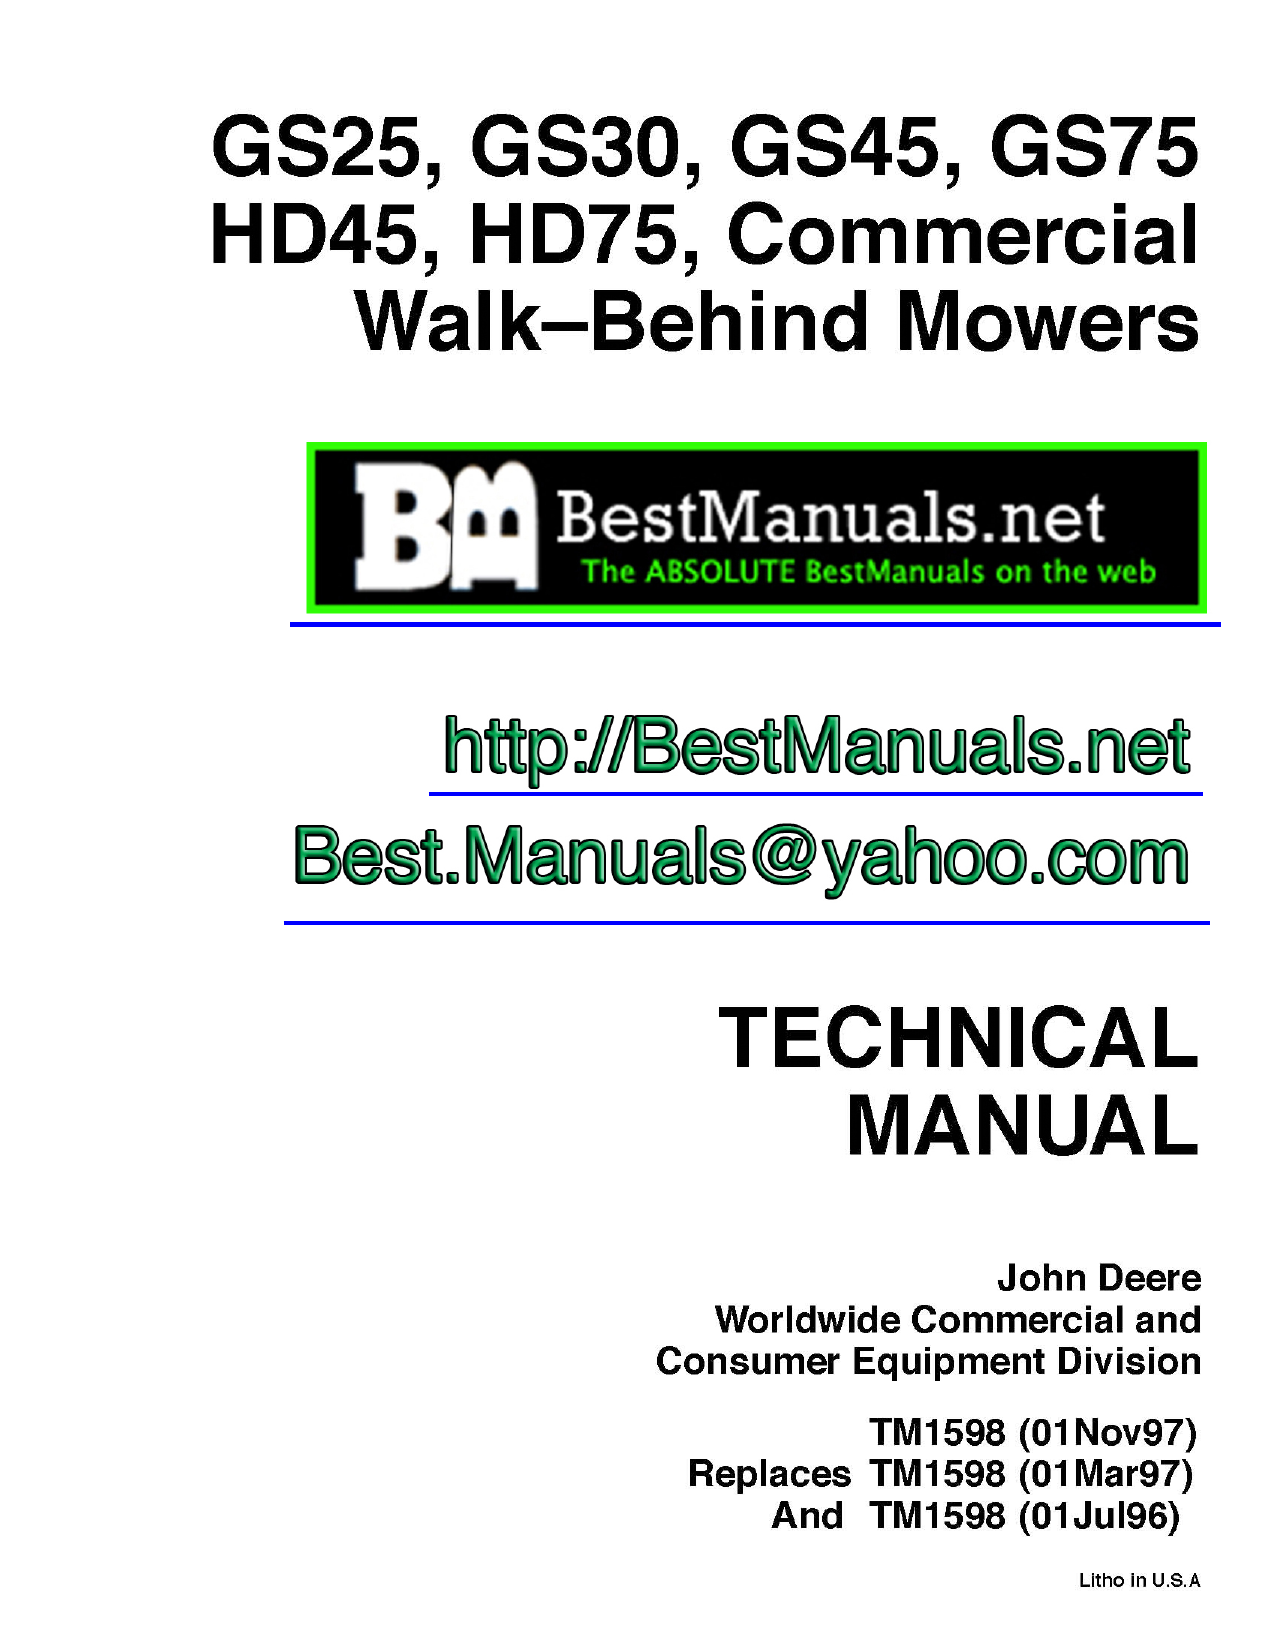 John Deere GS25, GS30, GS45, GS75, HD45, HD75 Walk Behind Mower technical manual Preview image 6